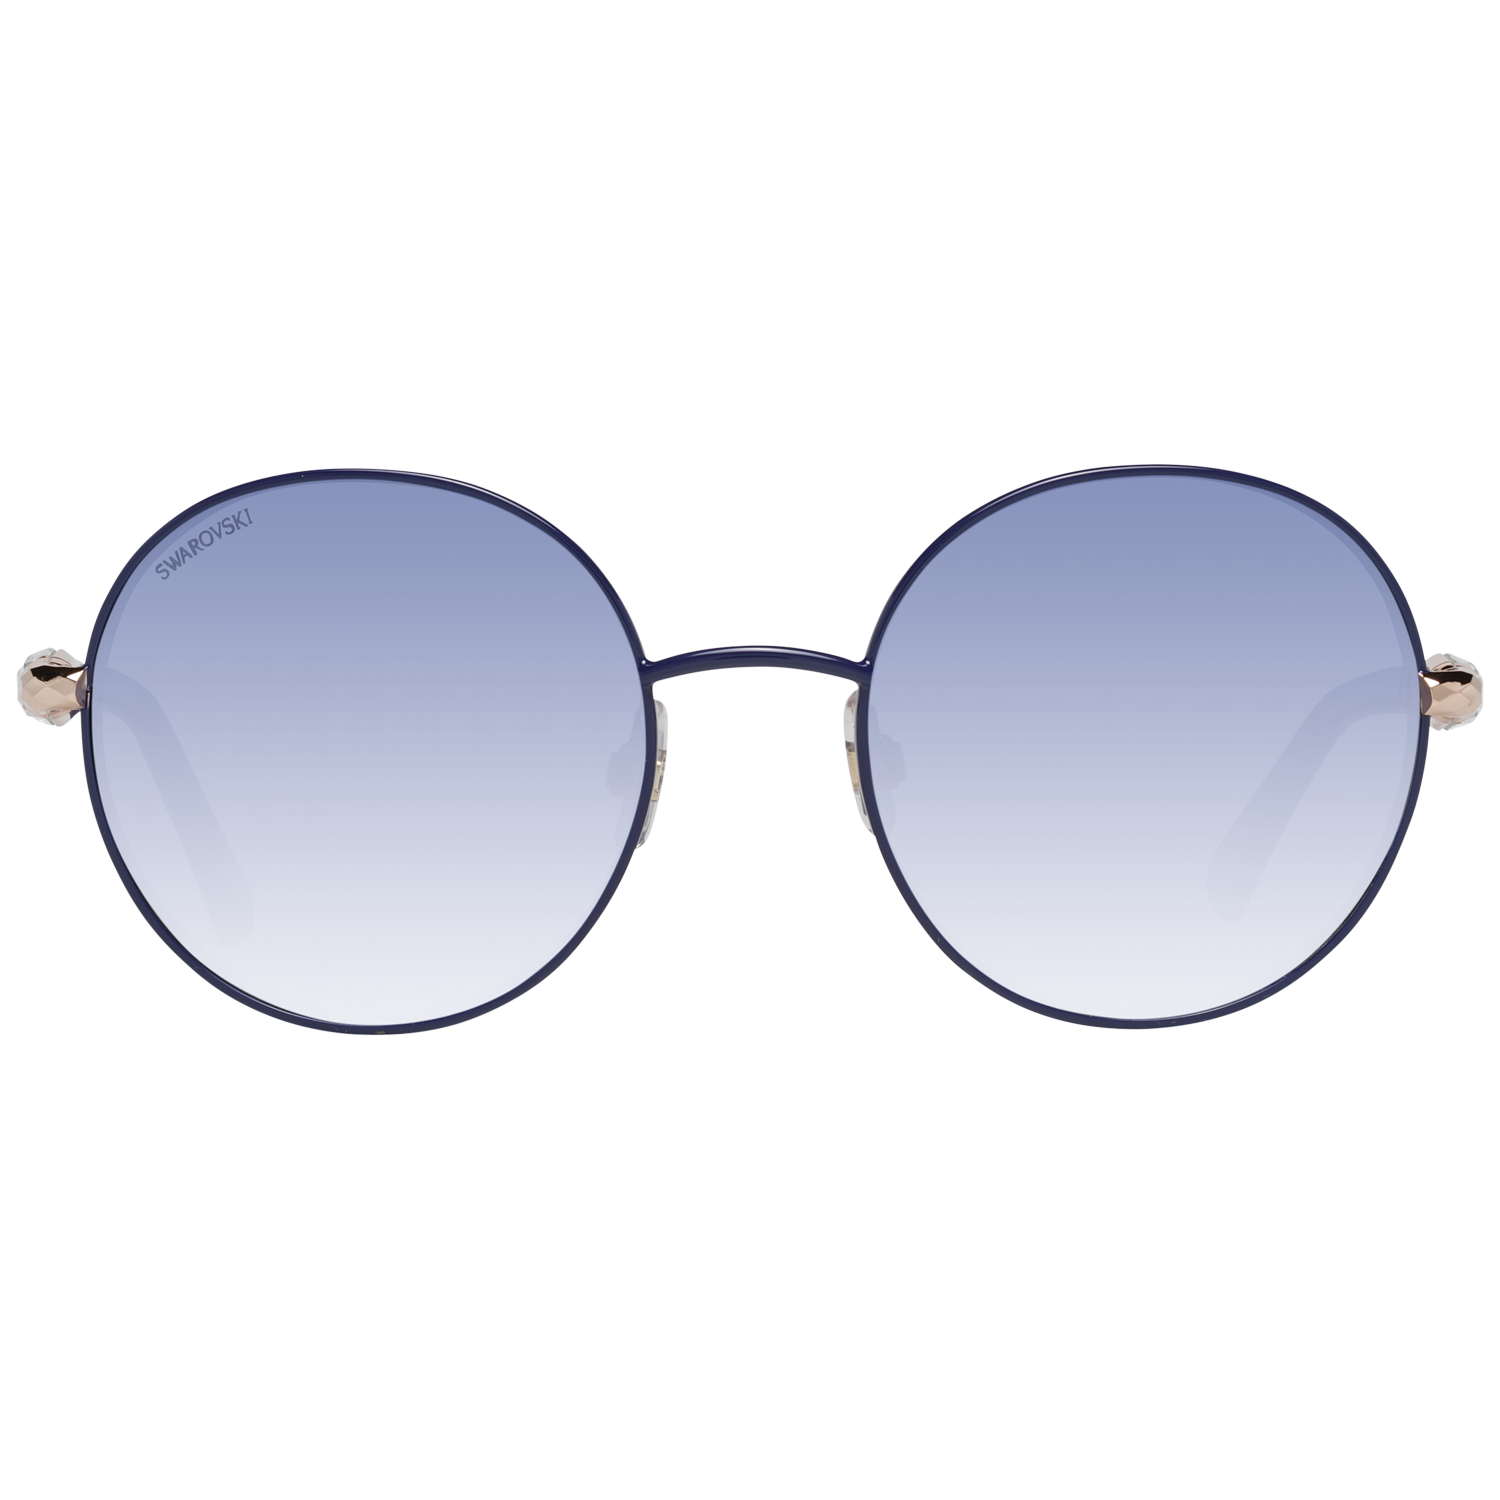 Swarovski Sunglasses Swarovski Sunglasses SK0260 92X 55 Eyeglasses Eyewear UK USA Australia 